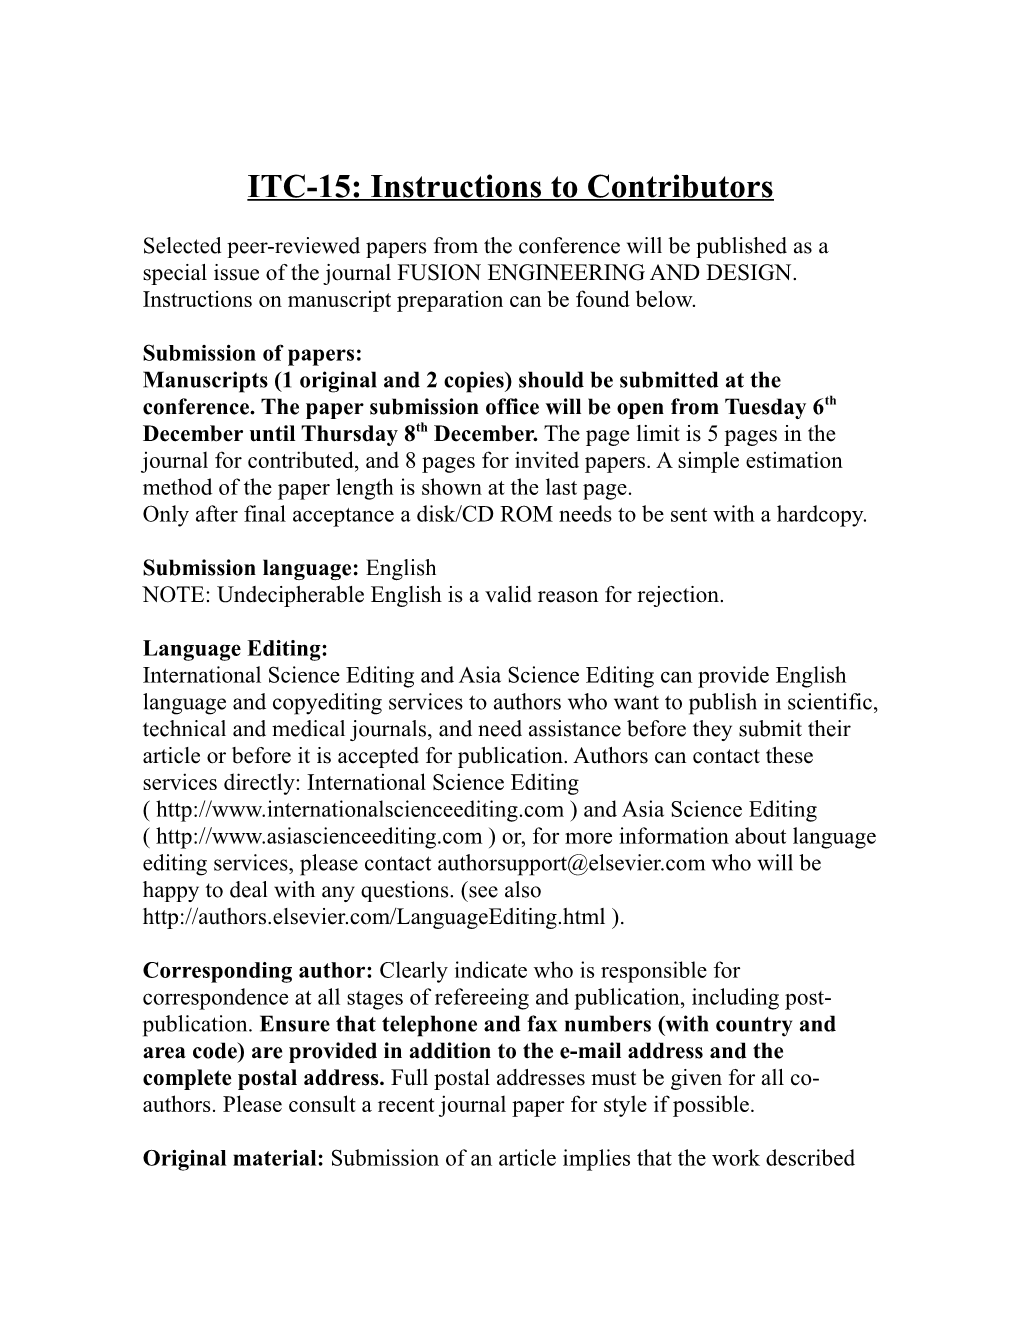 ITC-15: Instructions to Contributors